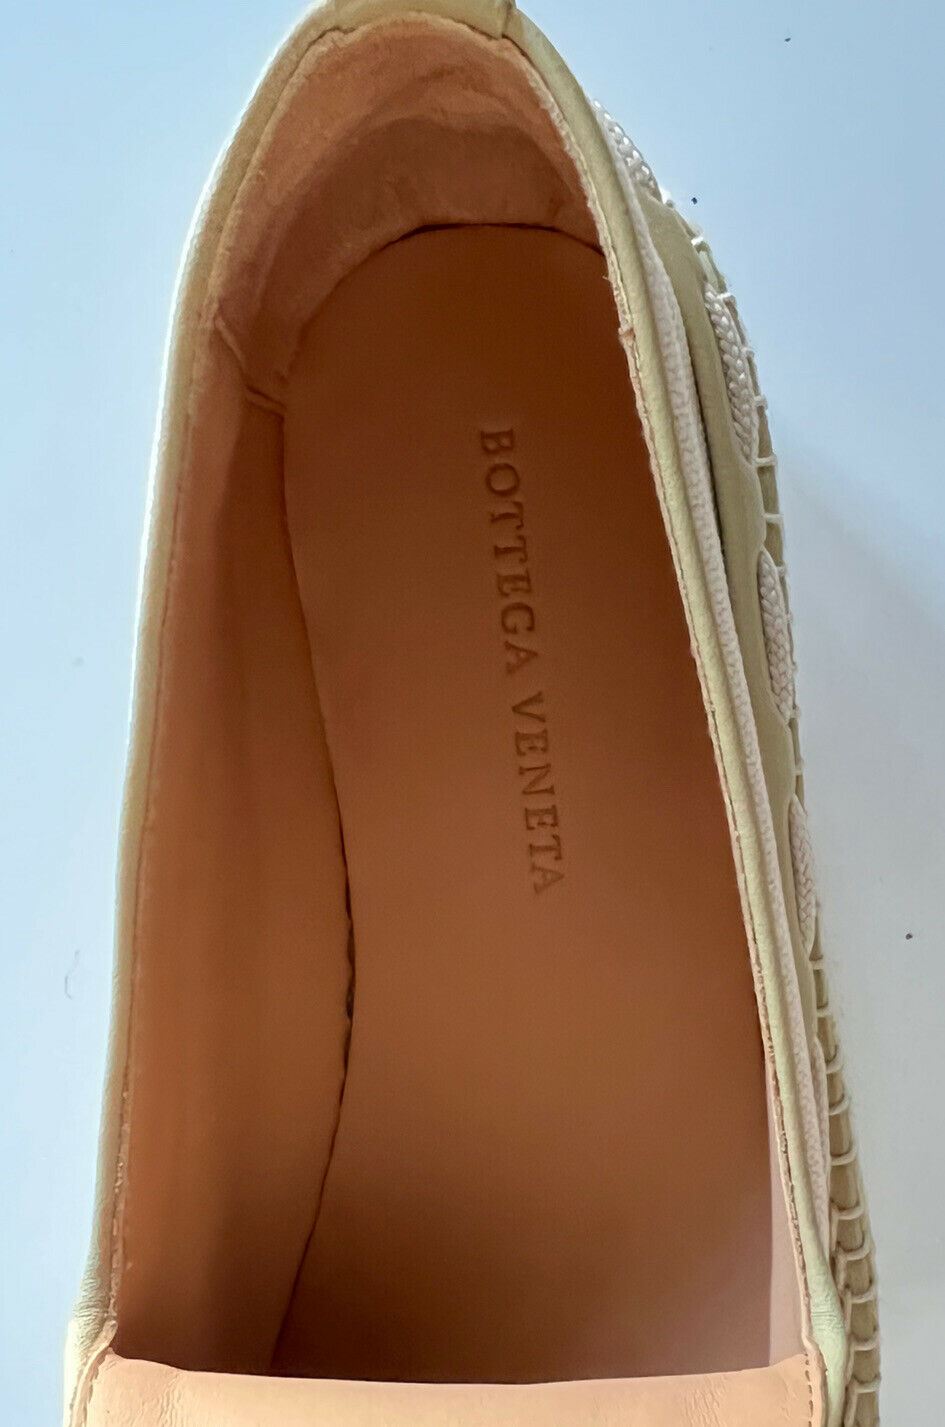 NIB $620 Bottega Veneta Women's Slip-on Espadrilles Shoes 9 US (39 Euro) 578386